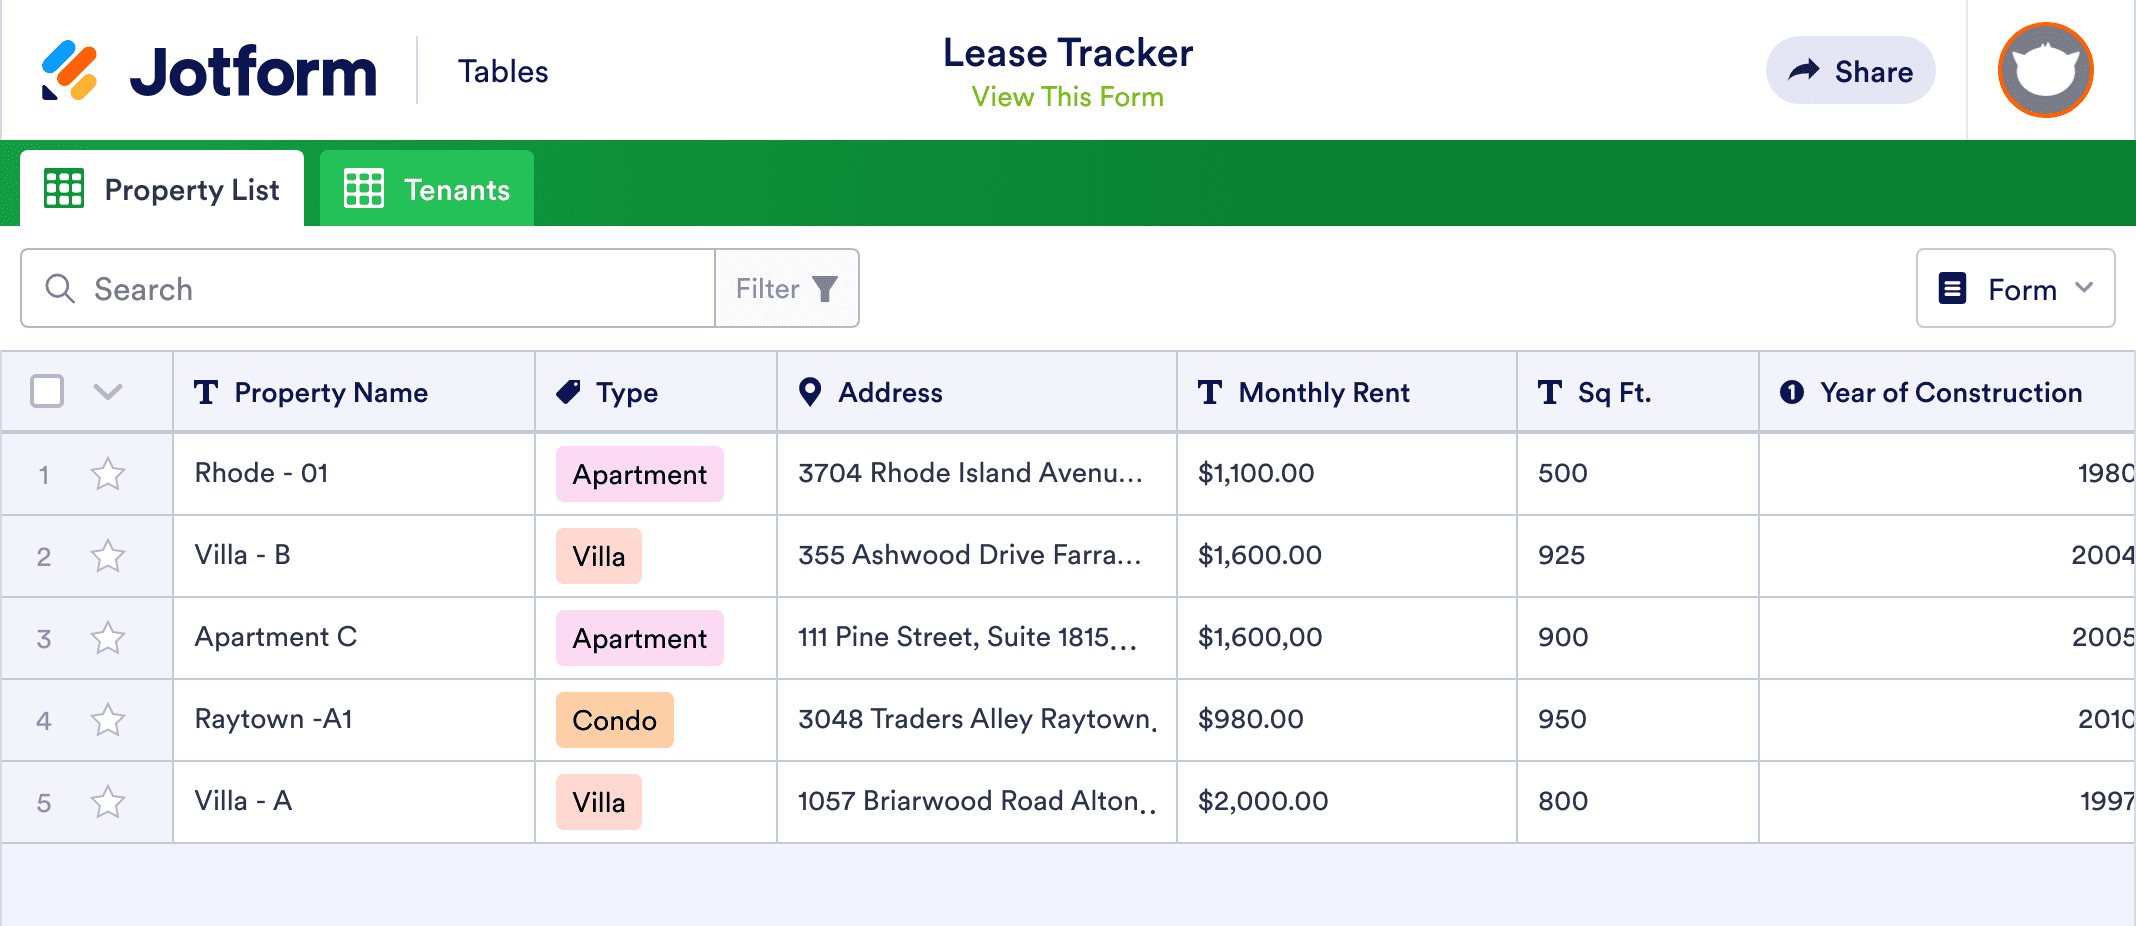 Lease Tracker